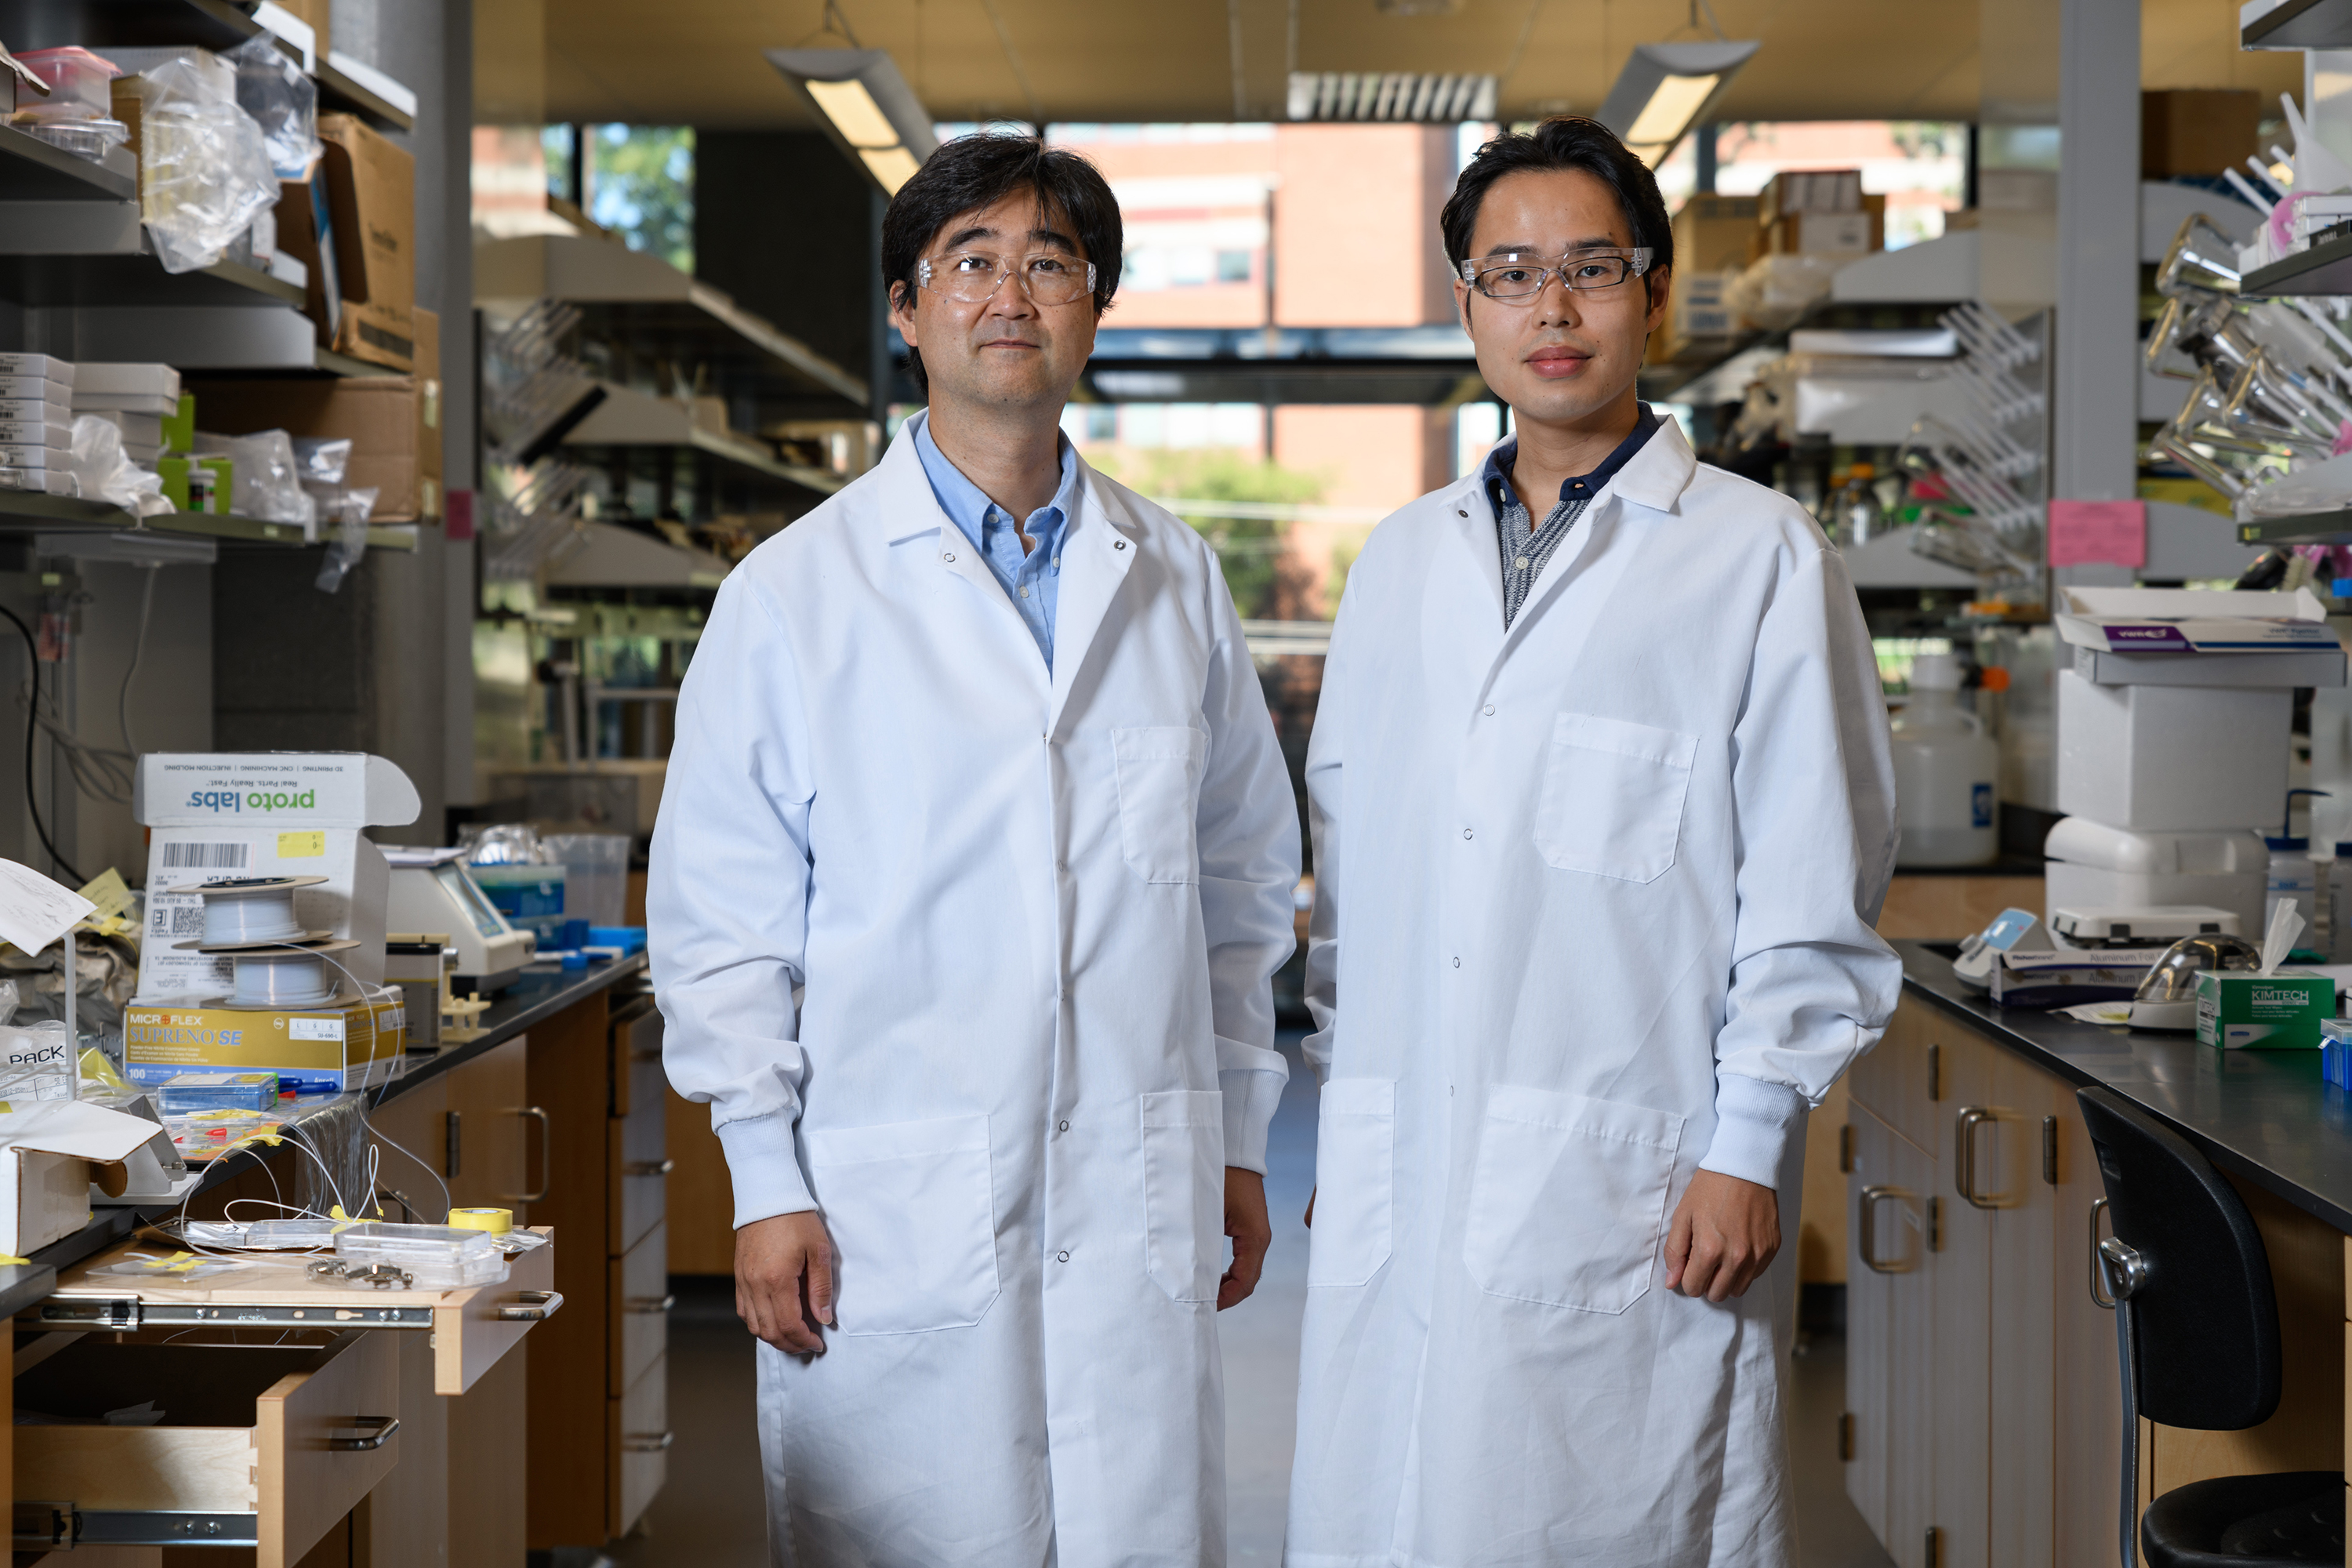 Principal investigator Shuichi Takayama and first author Taisuke Kojima in Takayama's lab at Georgia Tech. Credit: Georgia Tech / Rob Felt